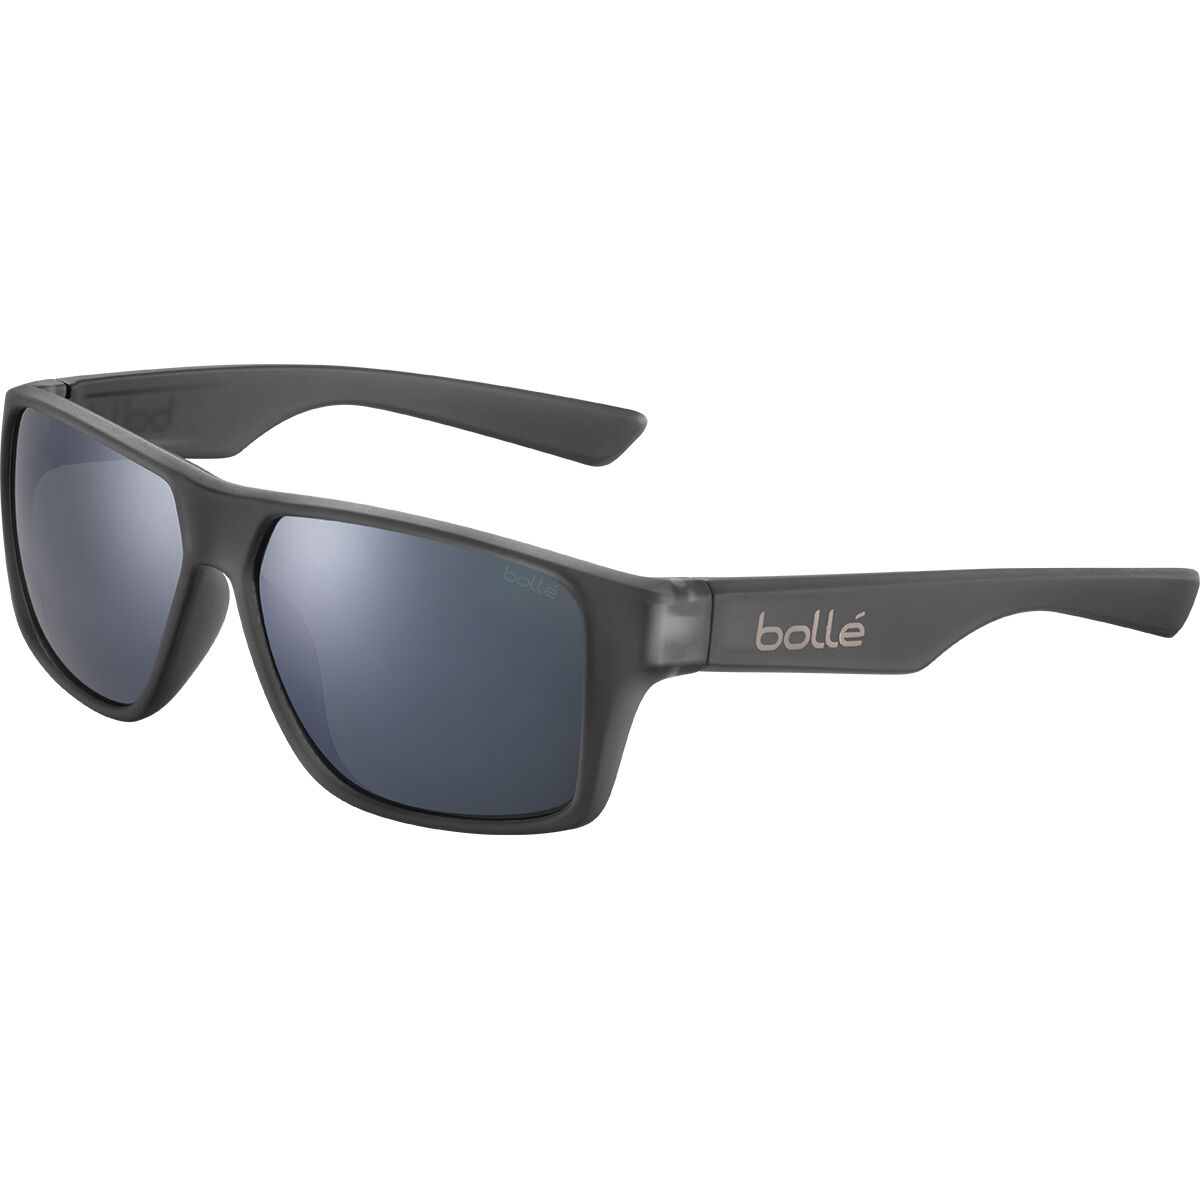 Bollé BRECKEN Sport Lifestyle Sunglasses - Polarized Lenses